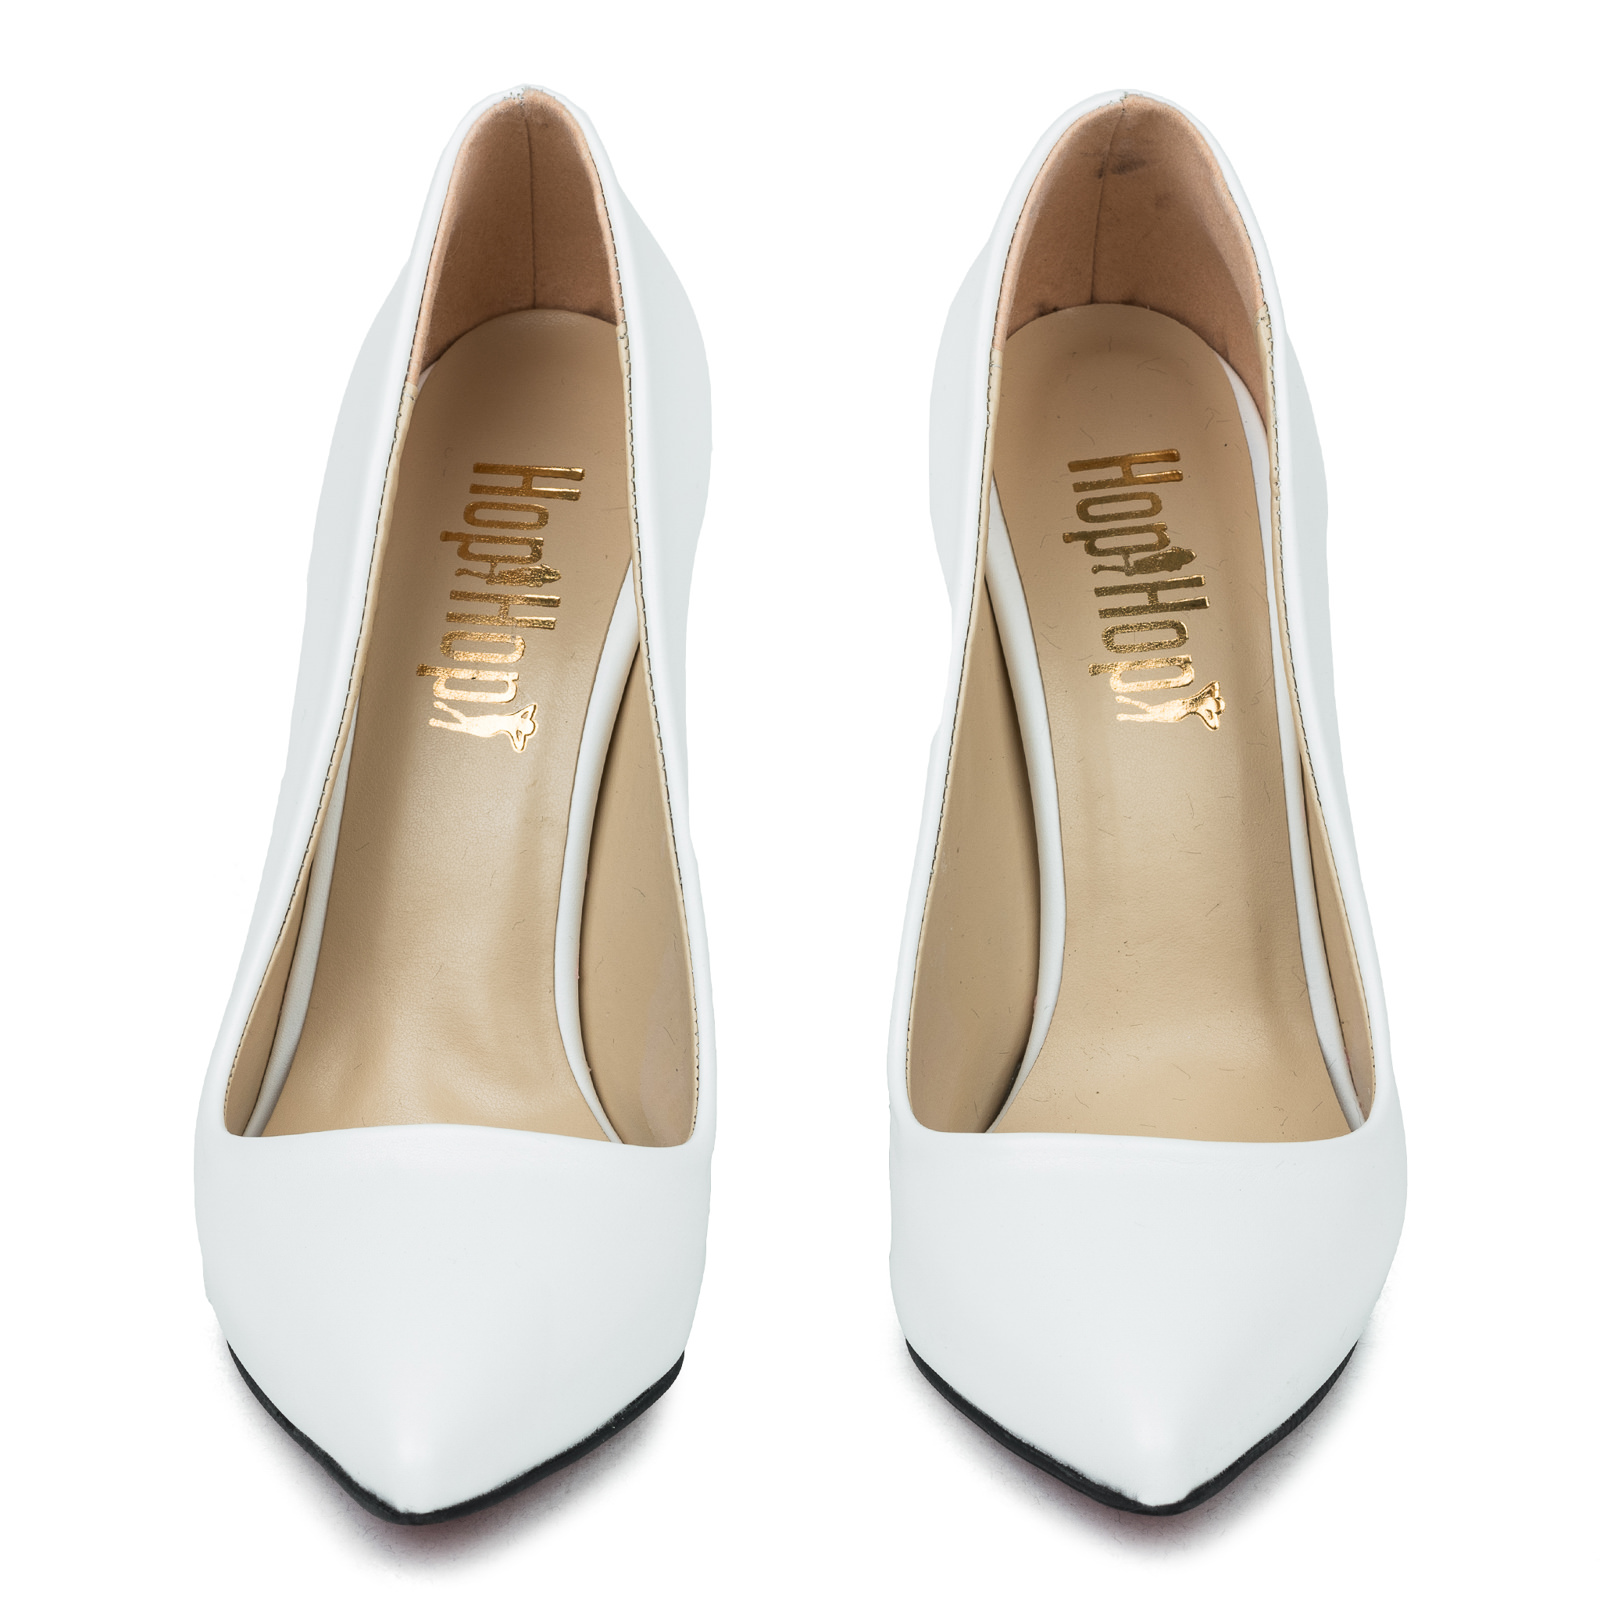 High-heels B177 - WHITE